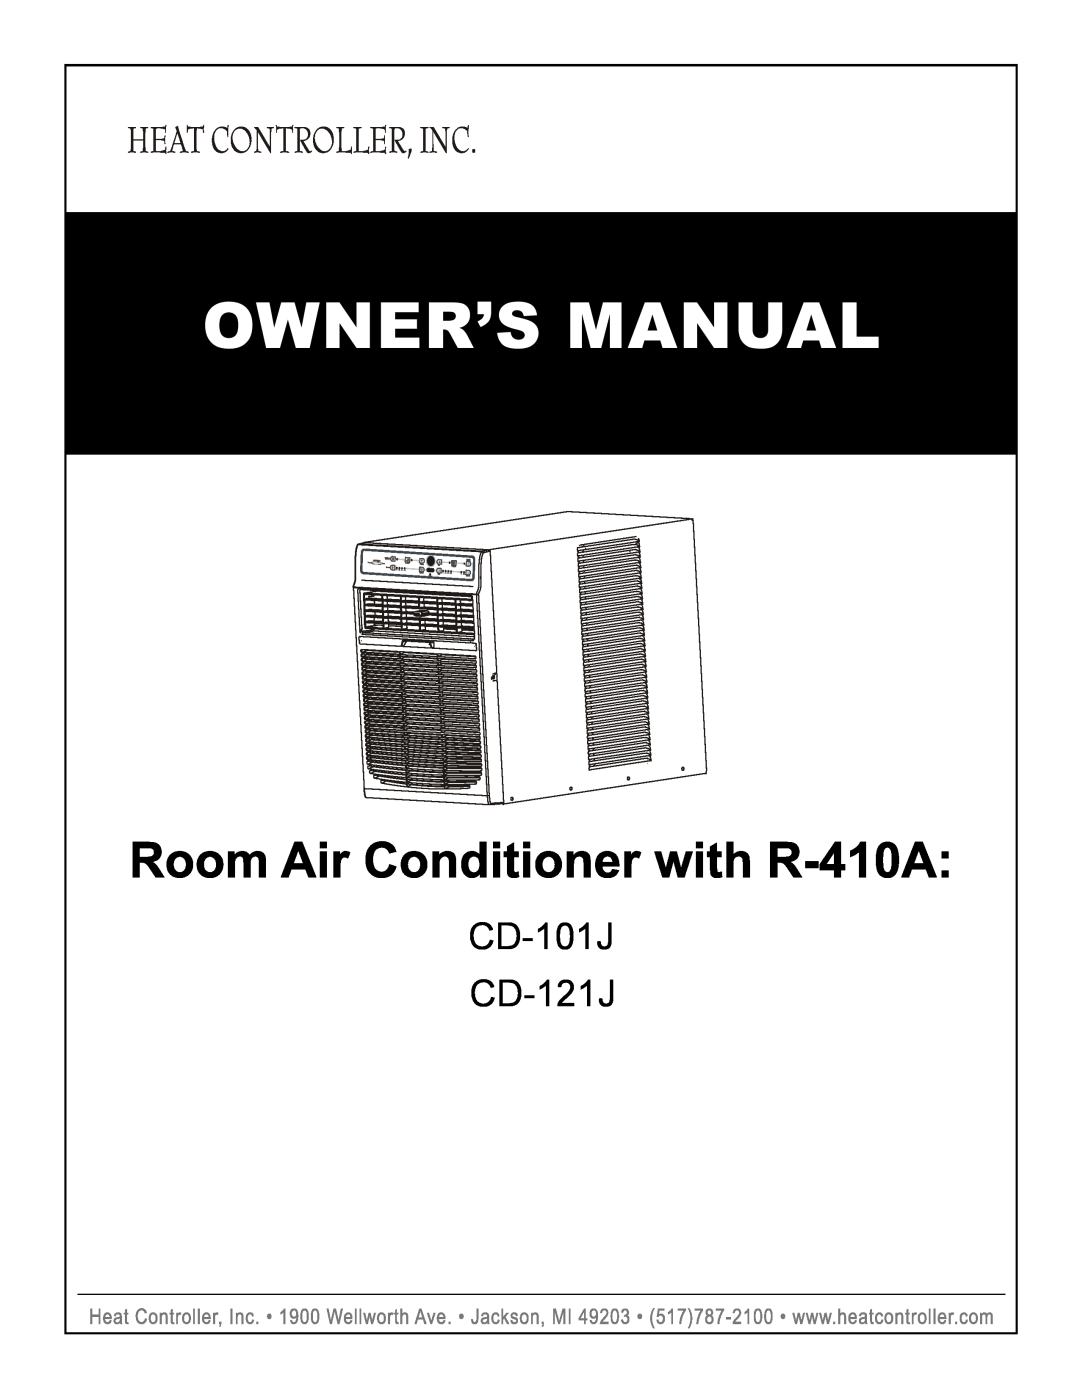 Heat Controller manual CD-101J CD-121J 